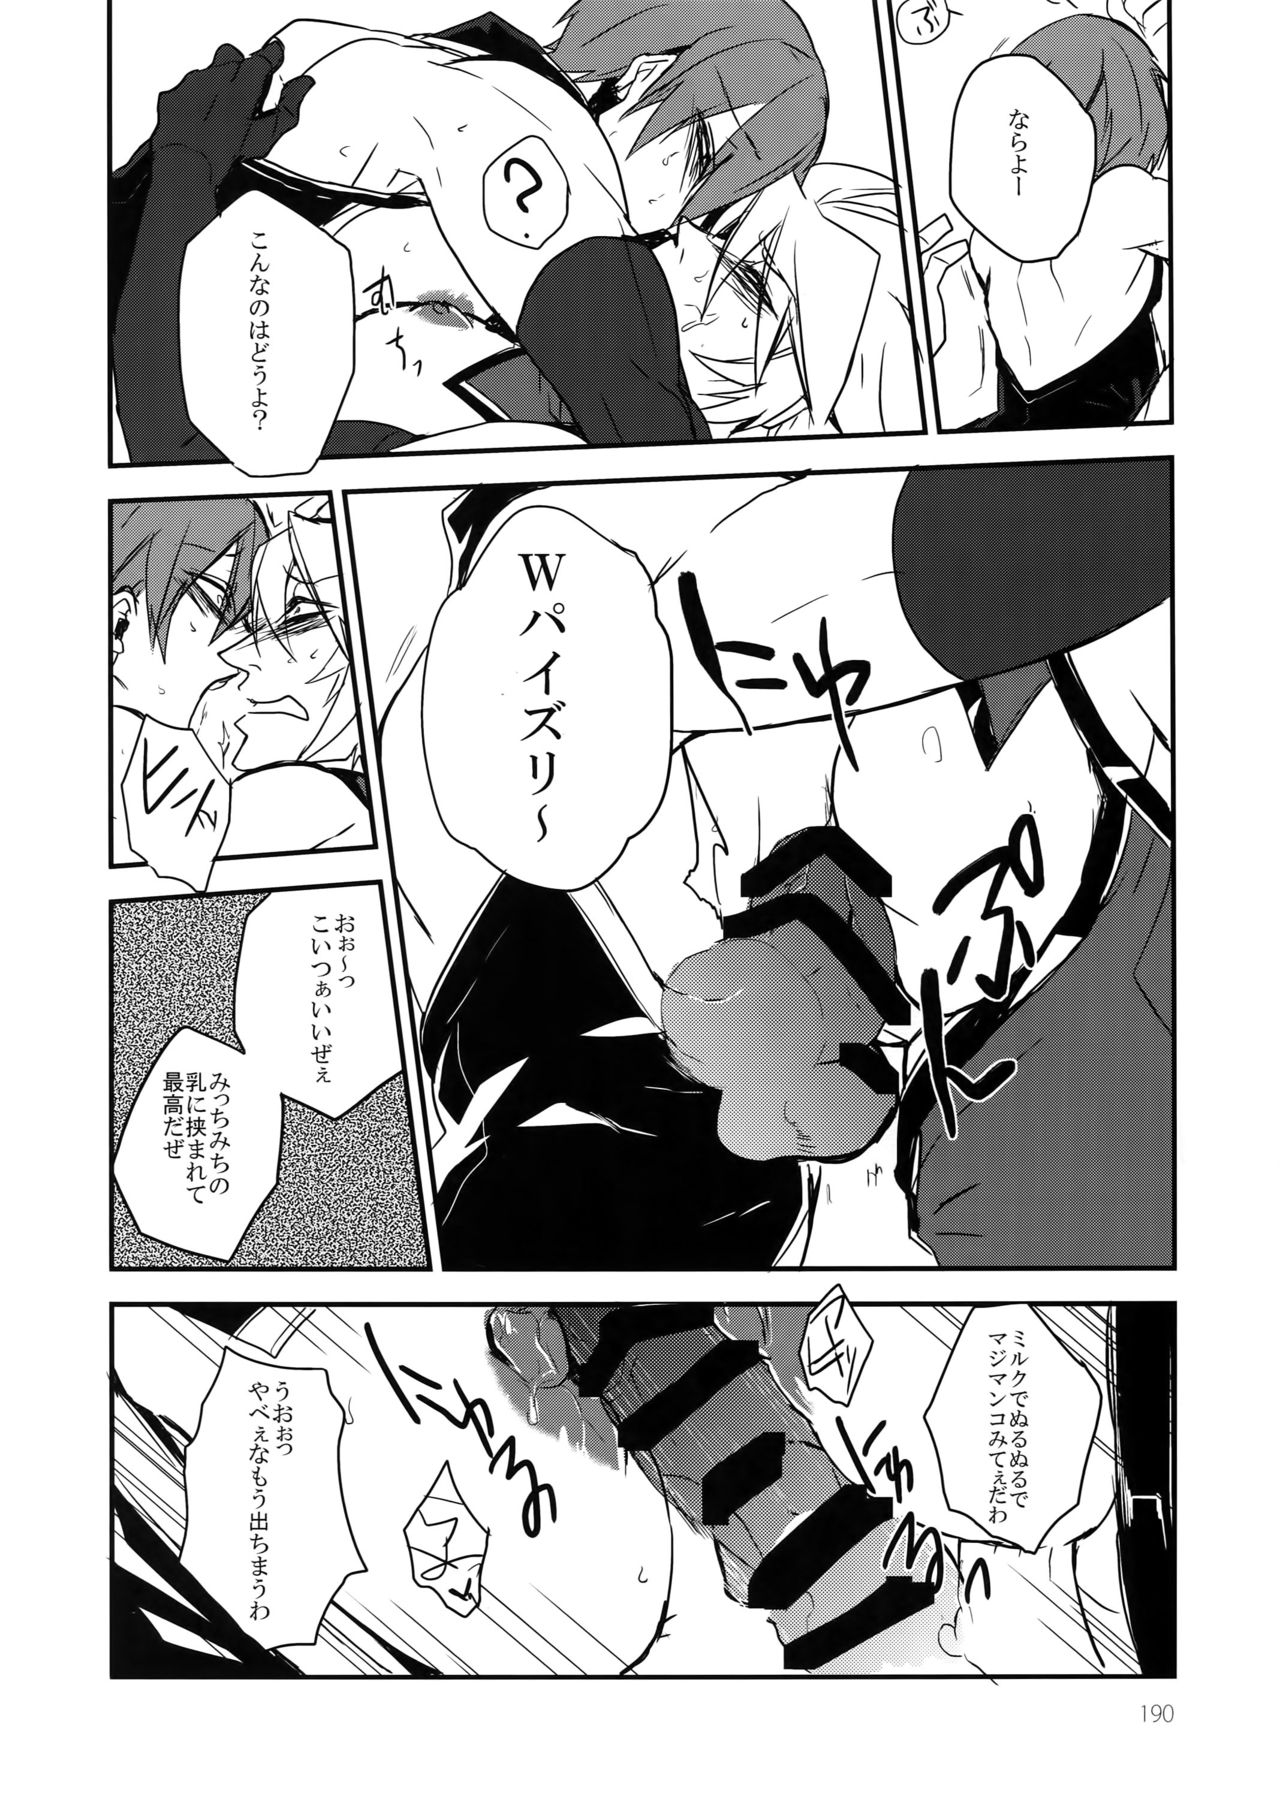 [DBH (Rokusuke)] RE_GREEN (BLAZBLUE) [DBH (ろくすけ)] RE_GREEN (ブレイブルー)